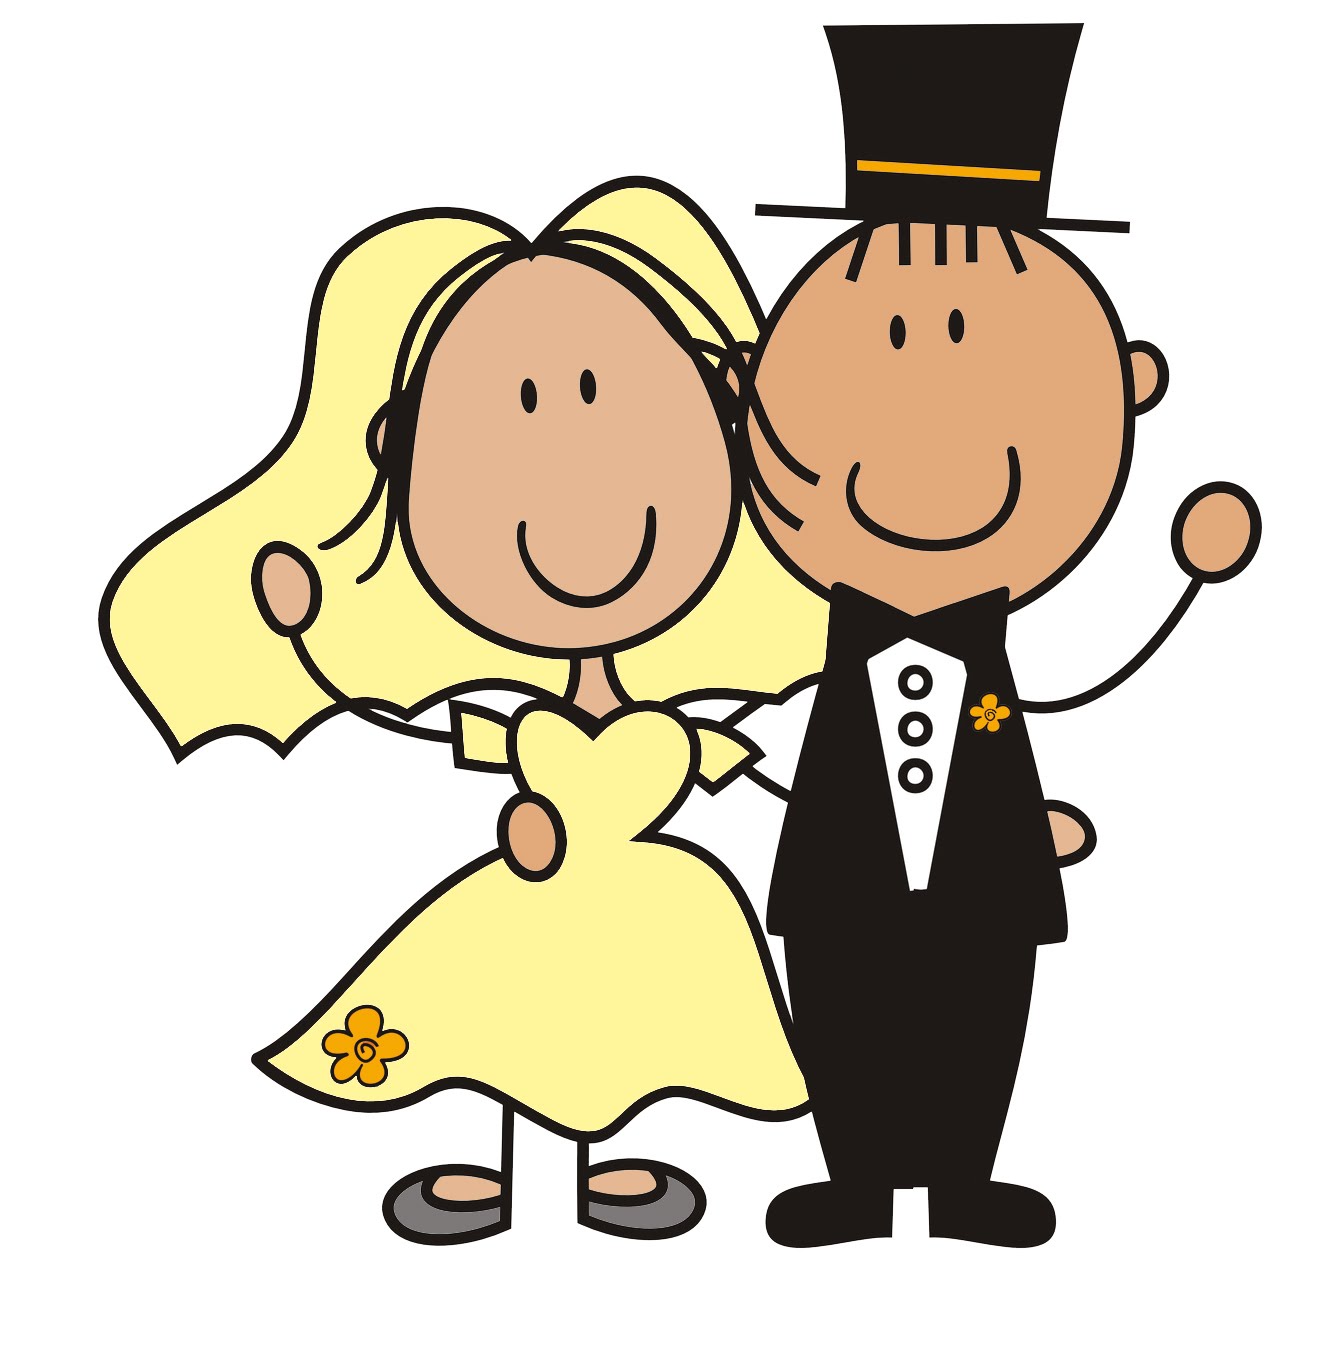 Free Wedding Couple Cartoon Images, Download Free Wedding Couple